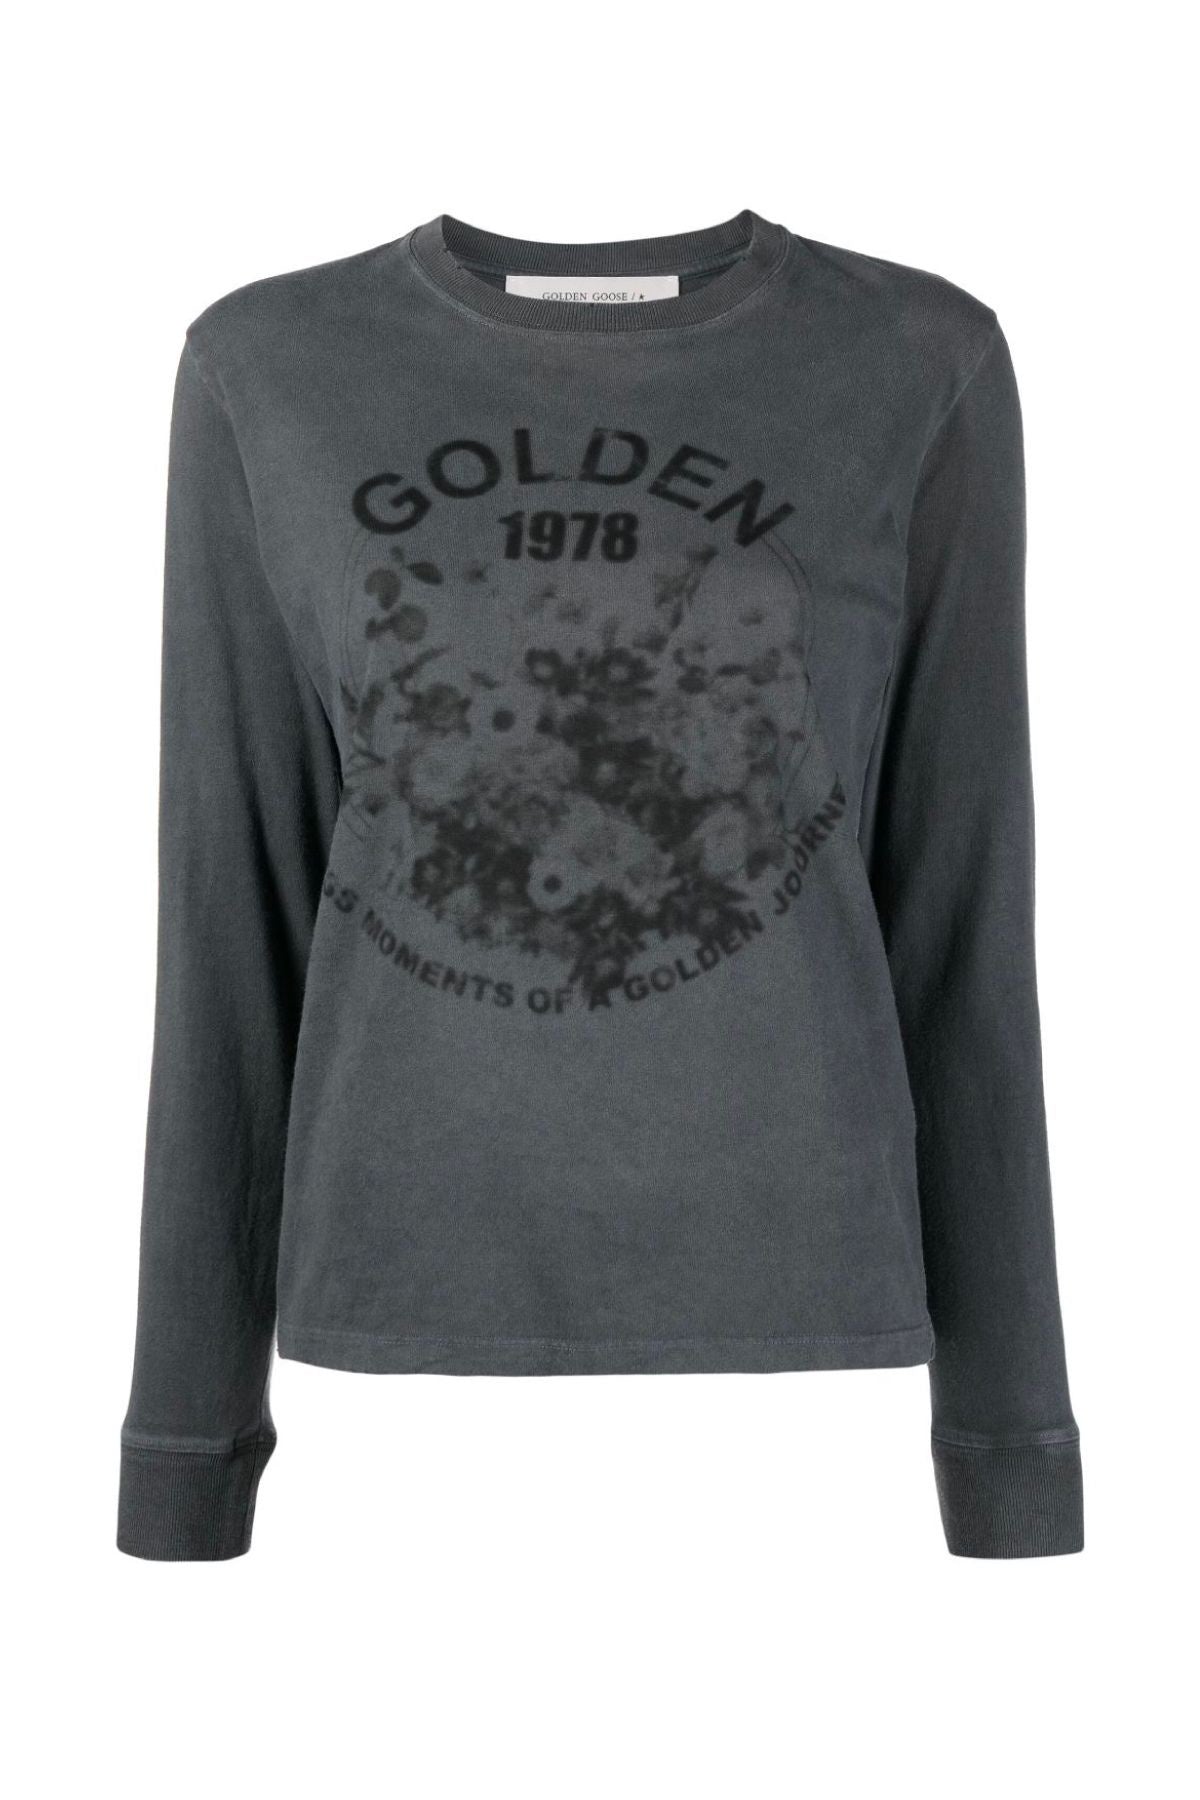 Golden Goose 1978 Distressed Long-Sleeve T-Shirt - Anthracite/ Black